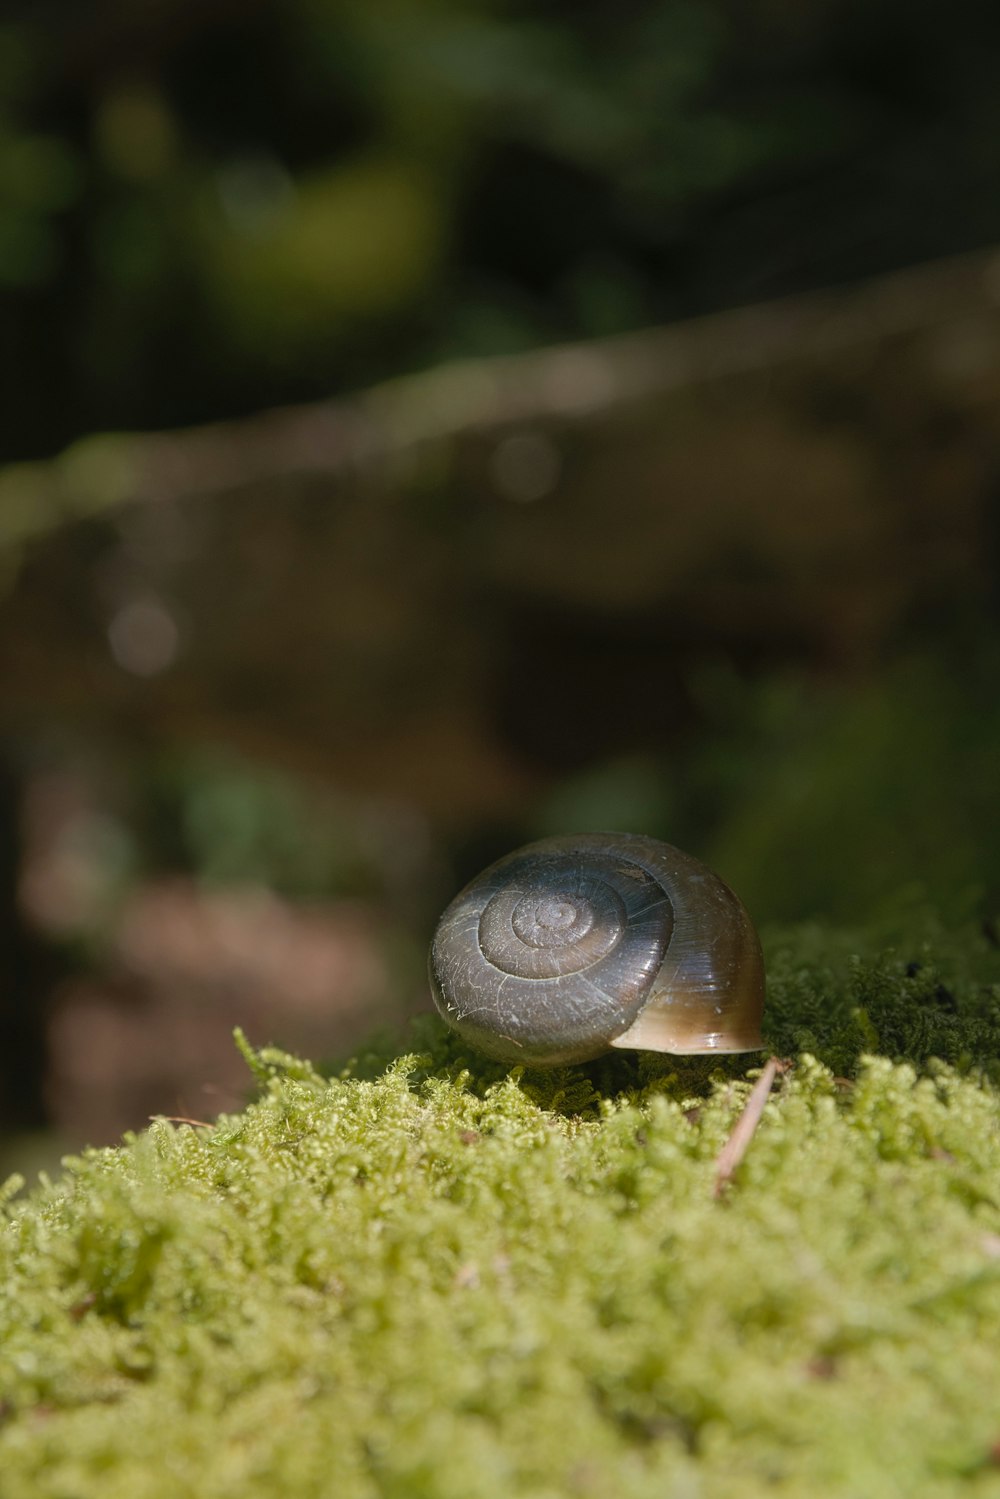 a snail on moss